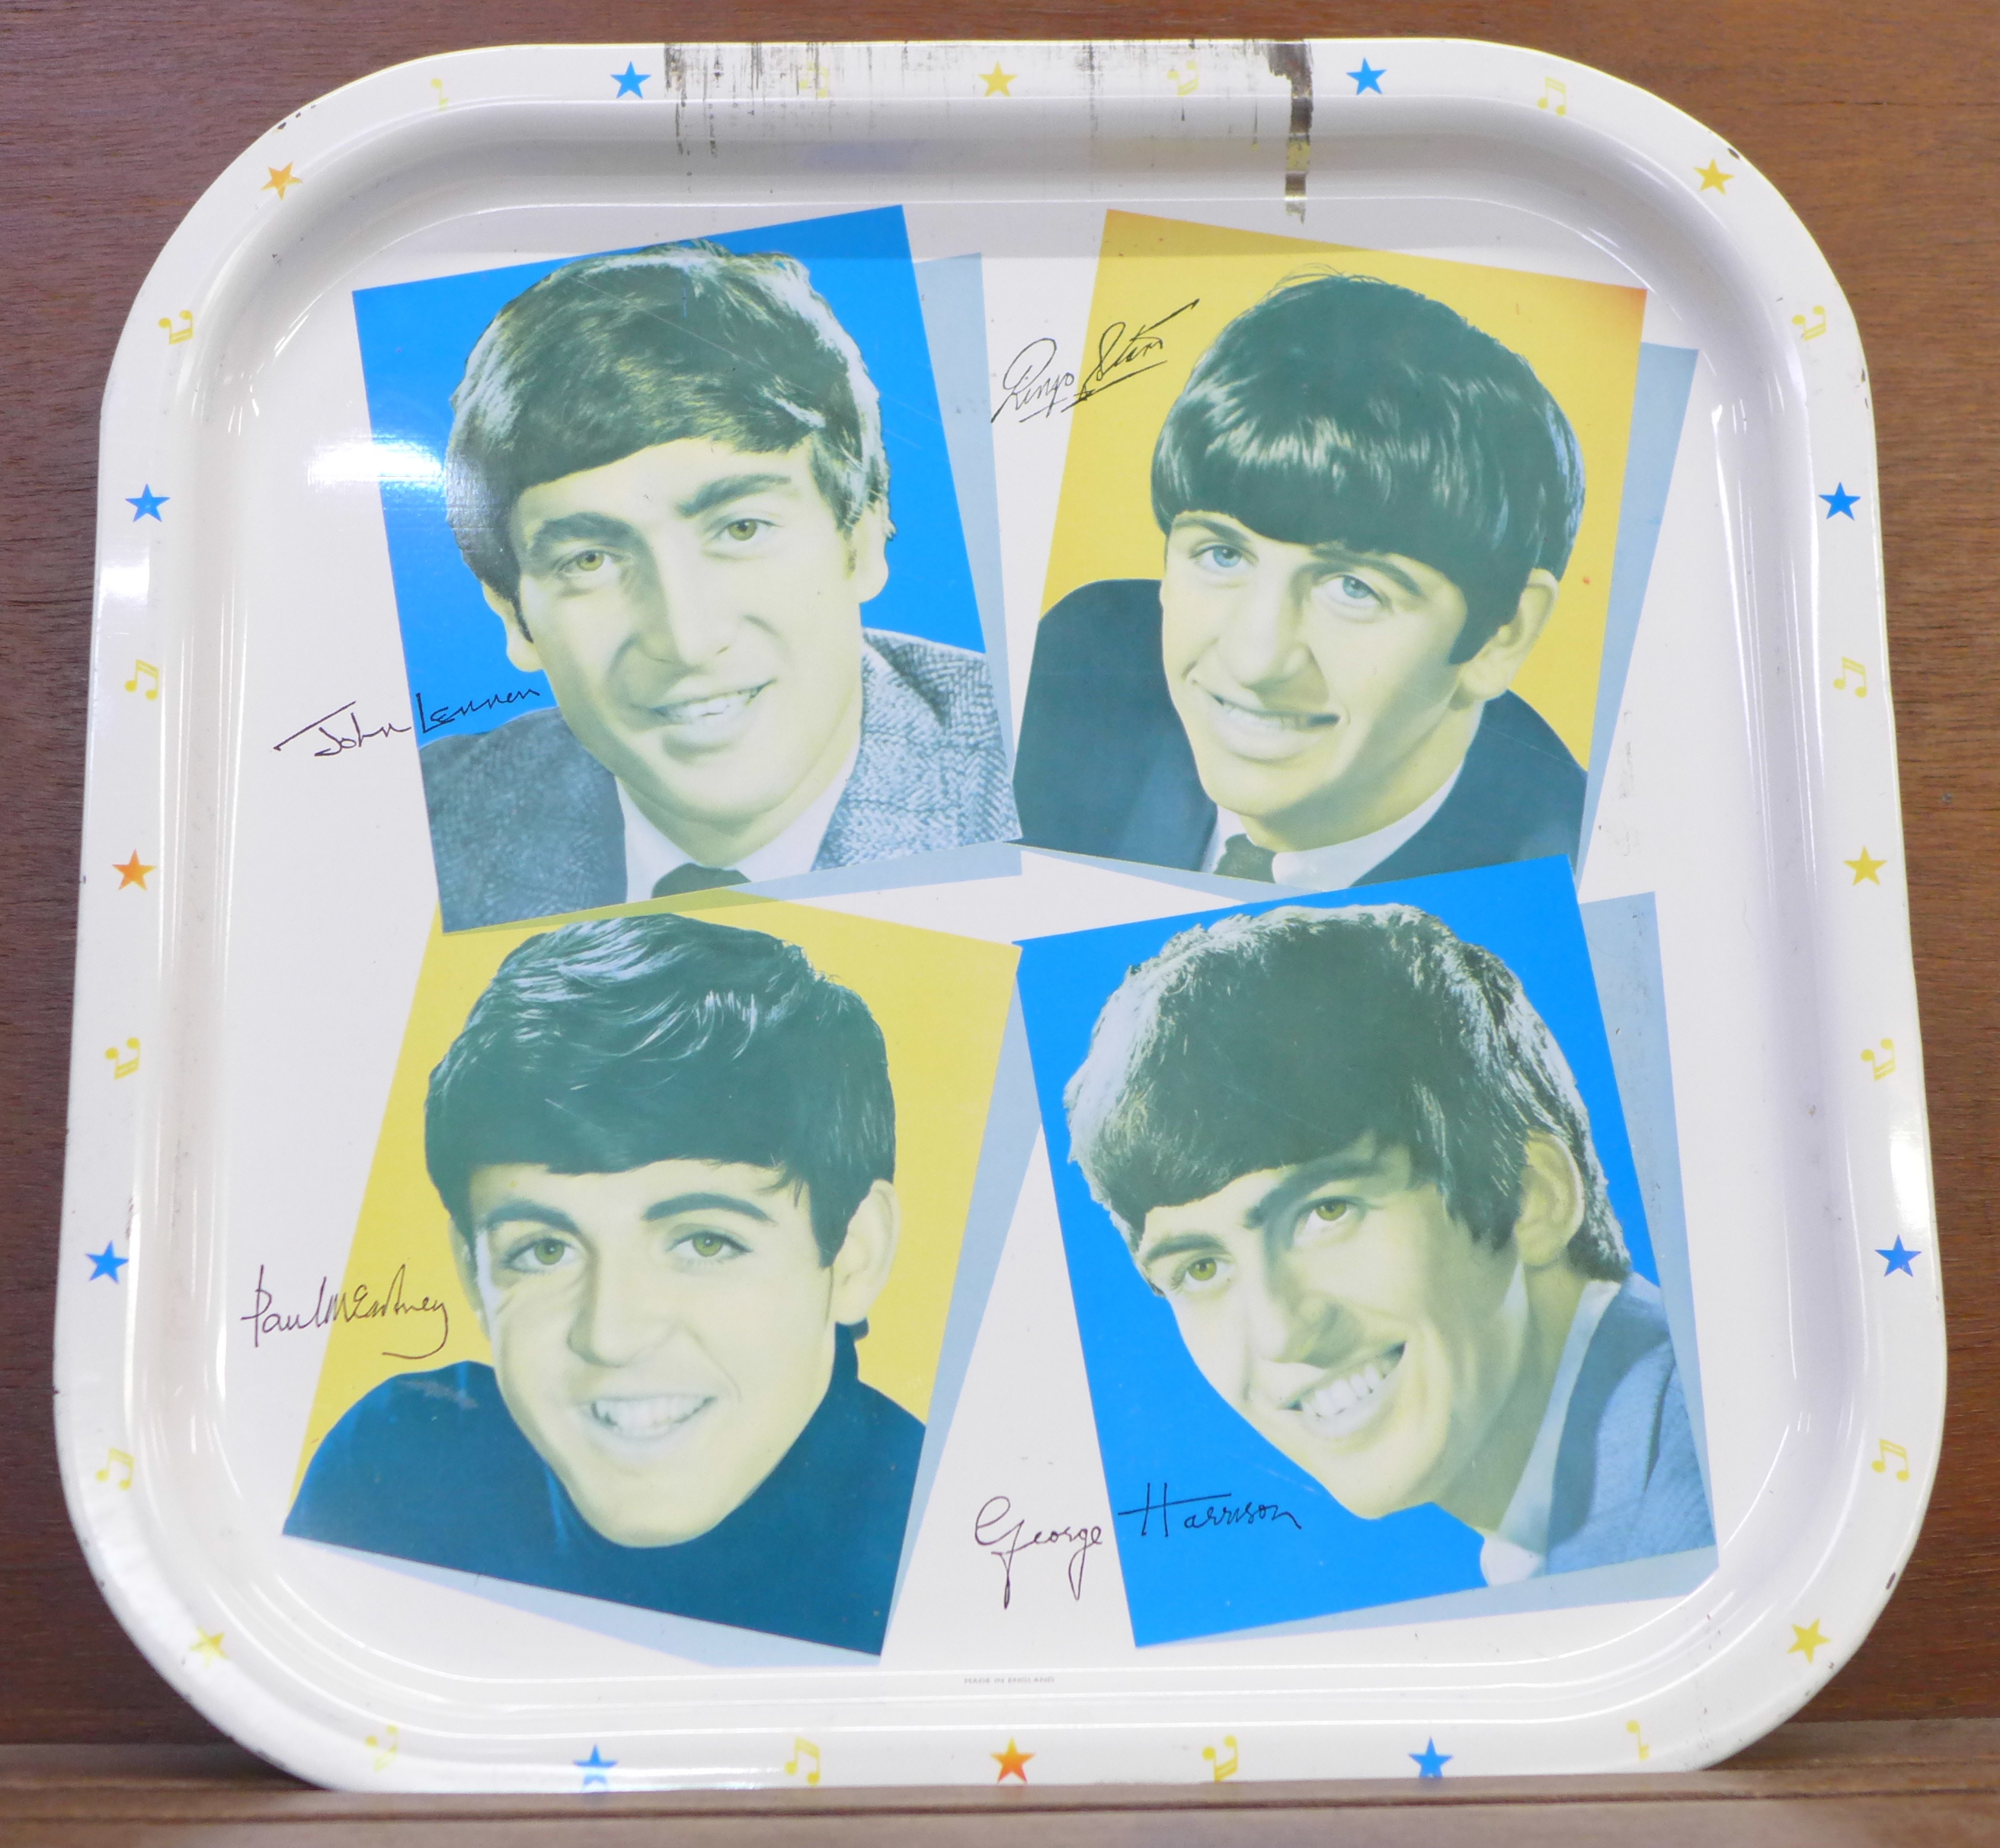 A Beatles tray